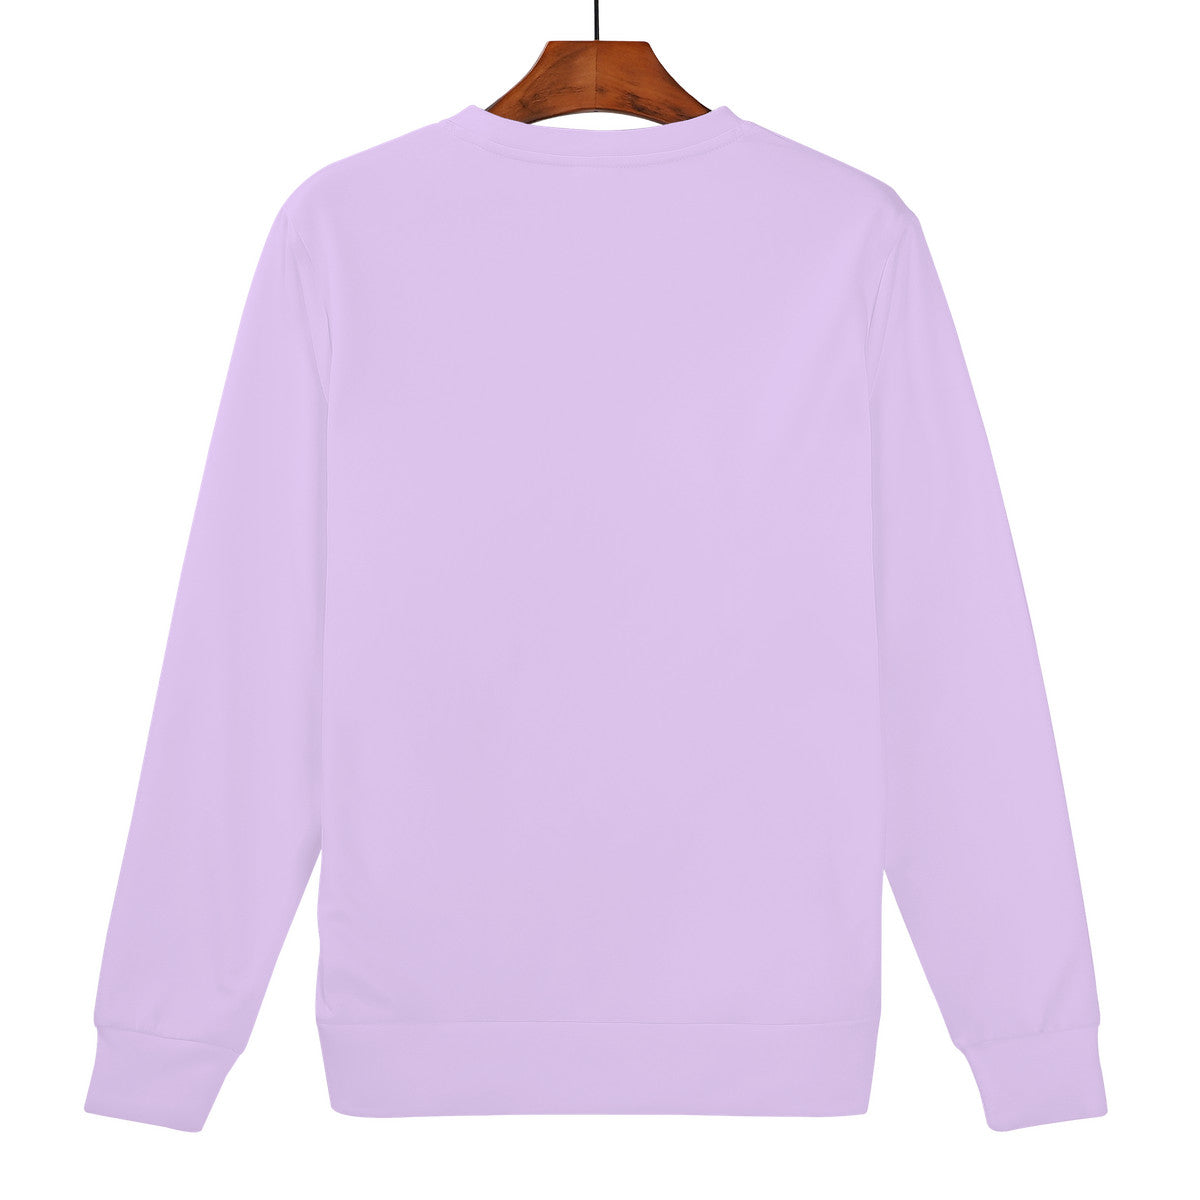 Purple Mang Sweatshirt | BTS BT21 Merchandise